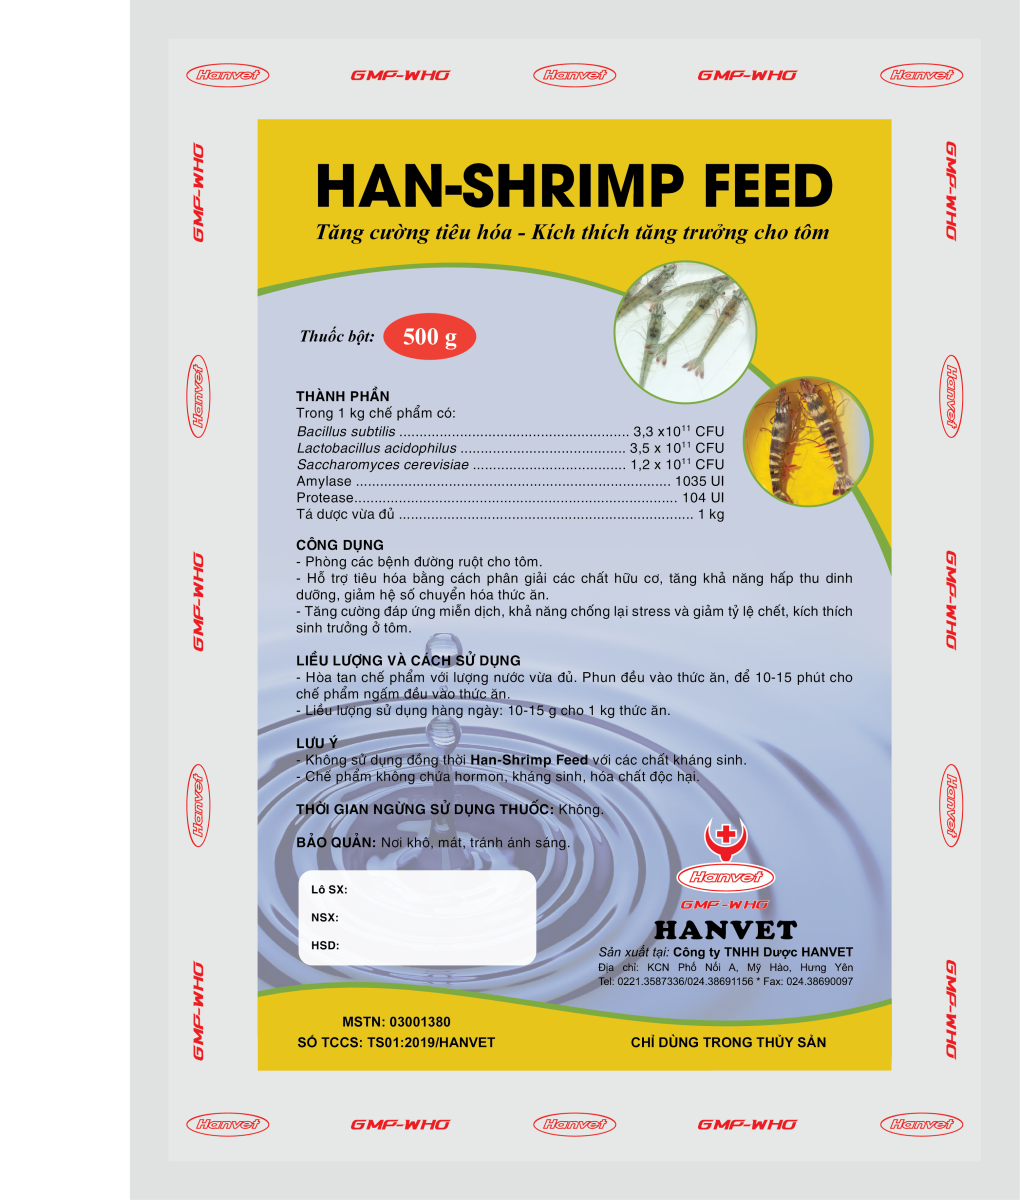 HAN-SHRIMP FEED